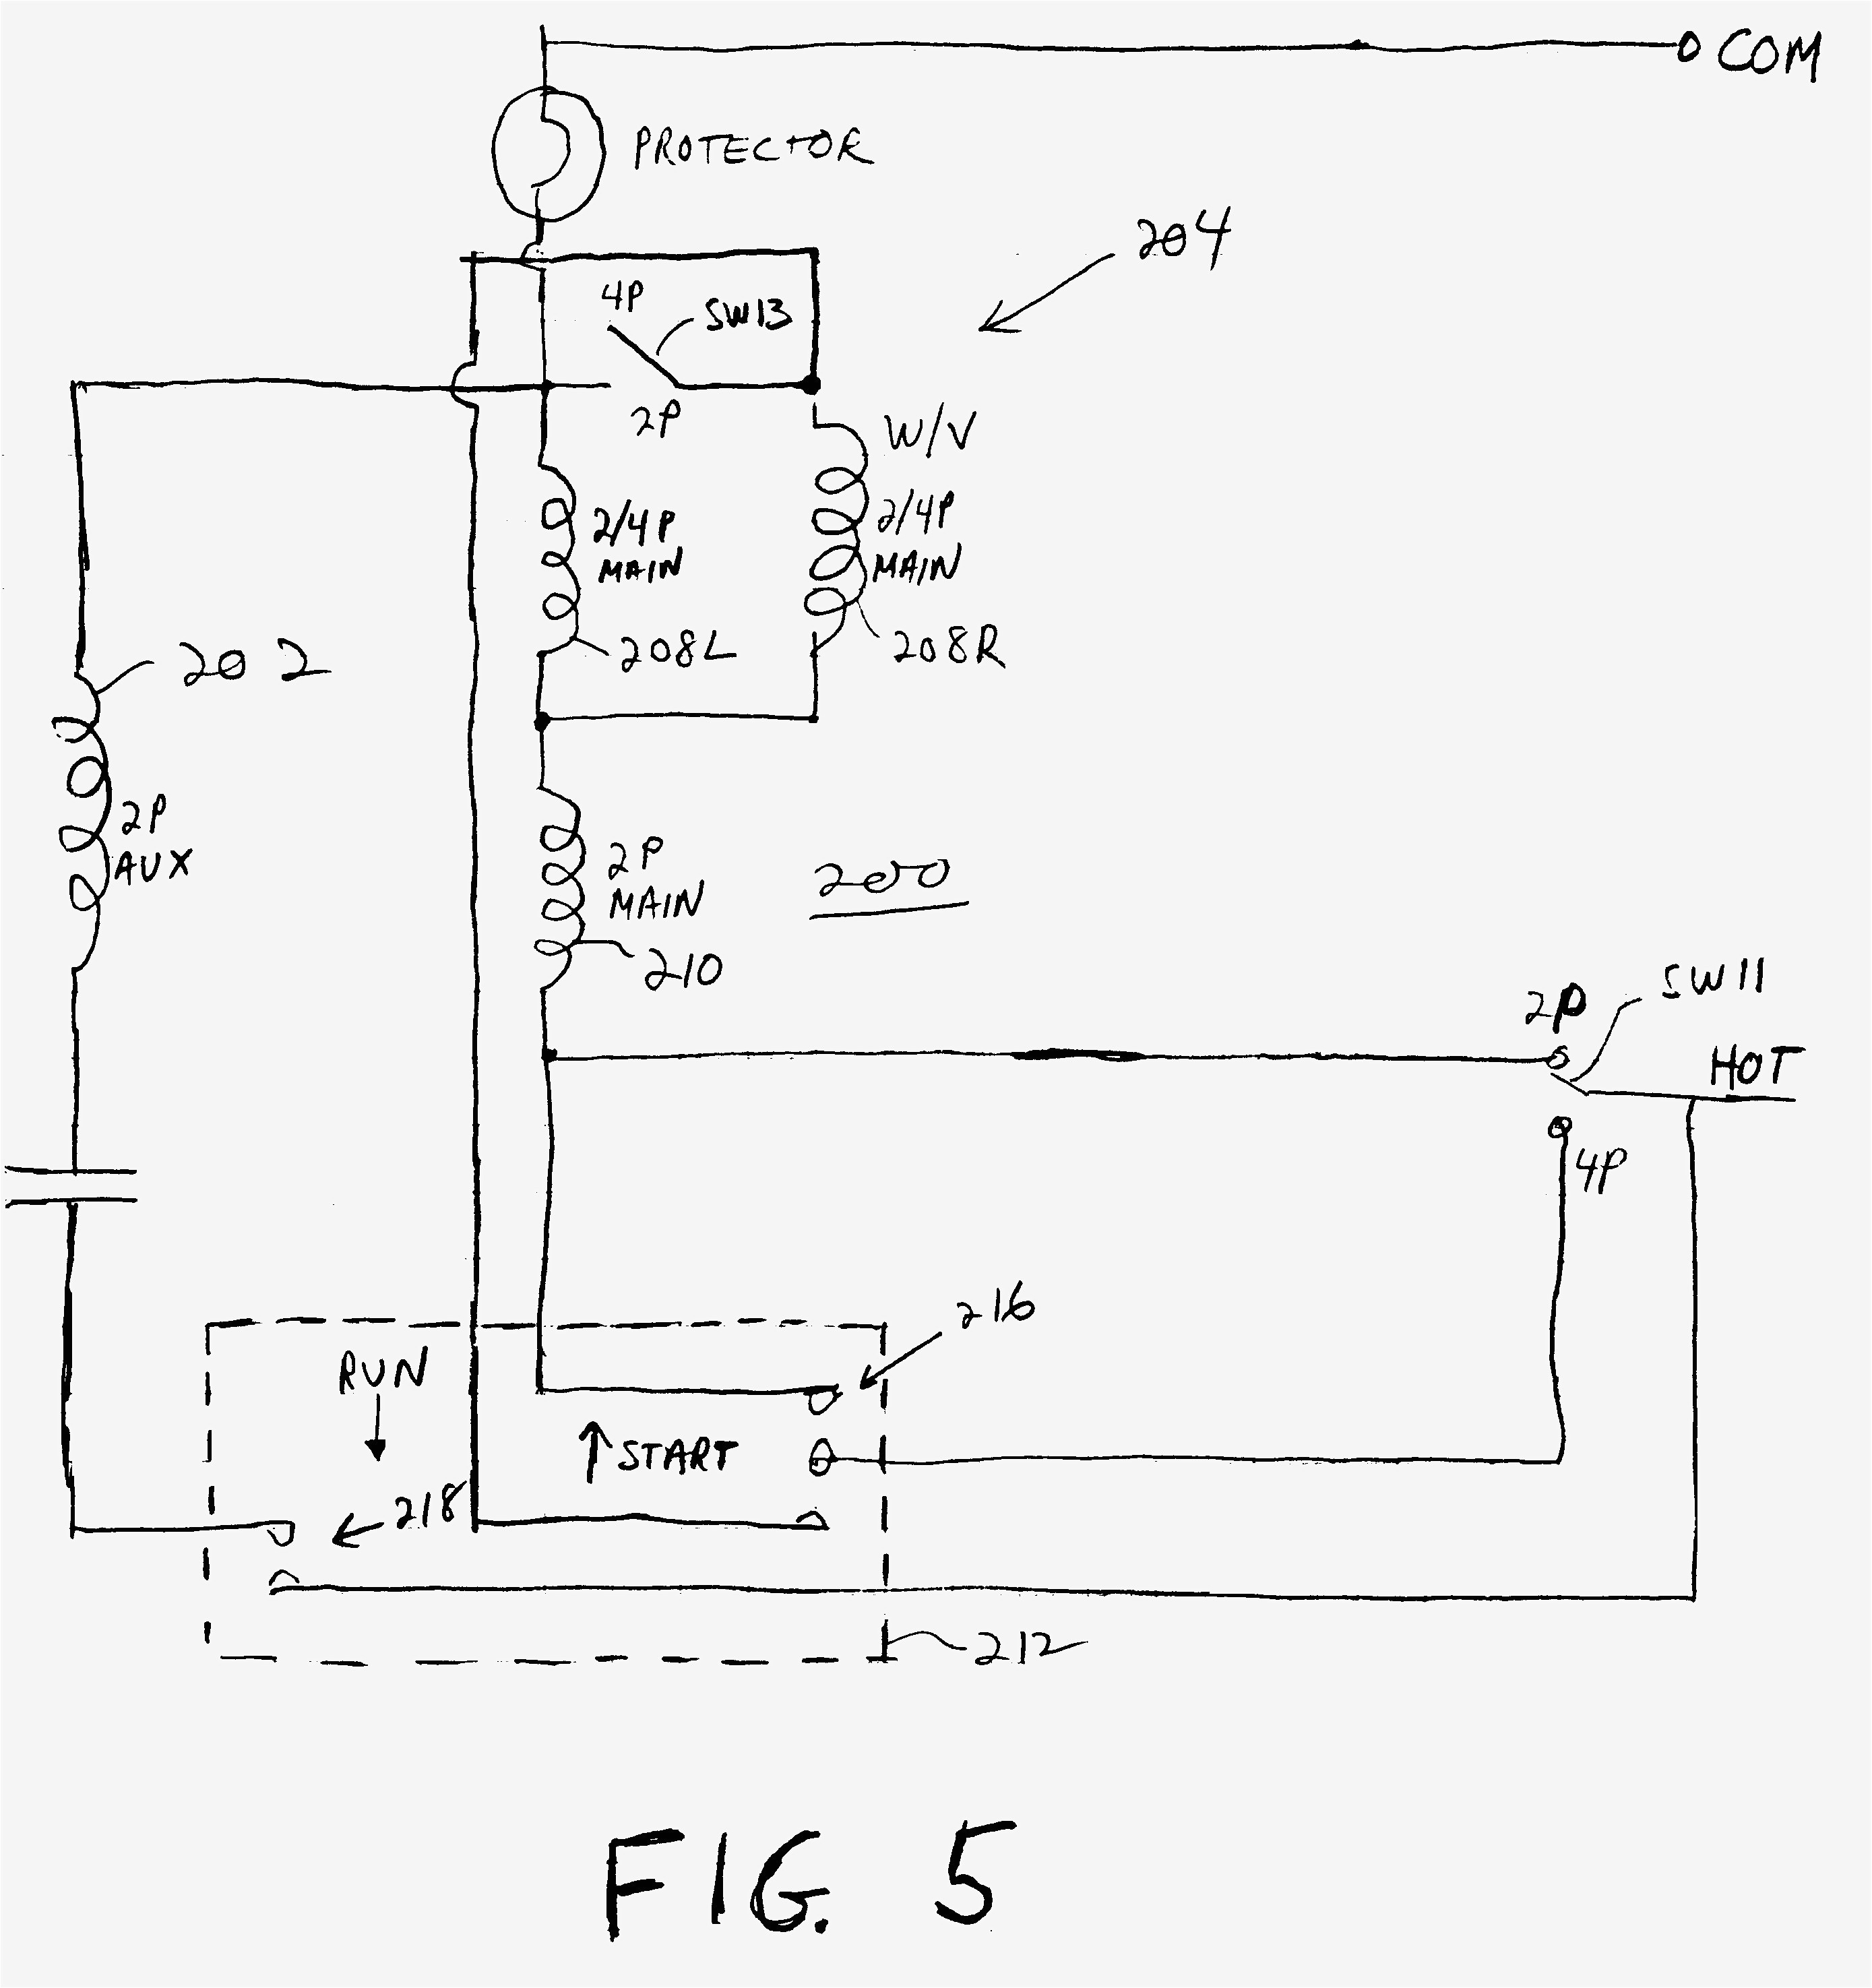 marathon generator wiring diagram another blog about wiring diagram marathon generator wire diagram marathon generators wire diagram